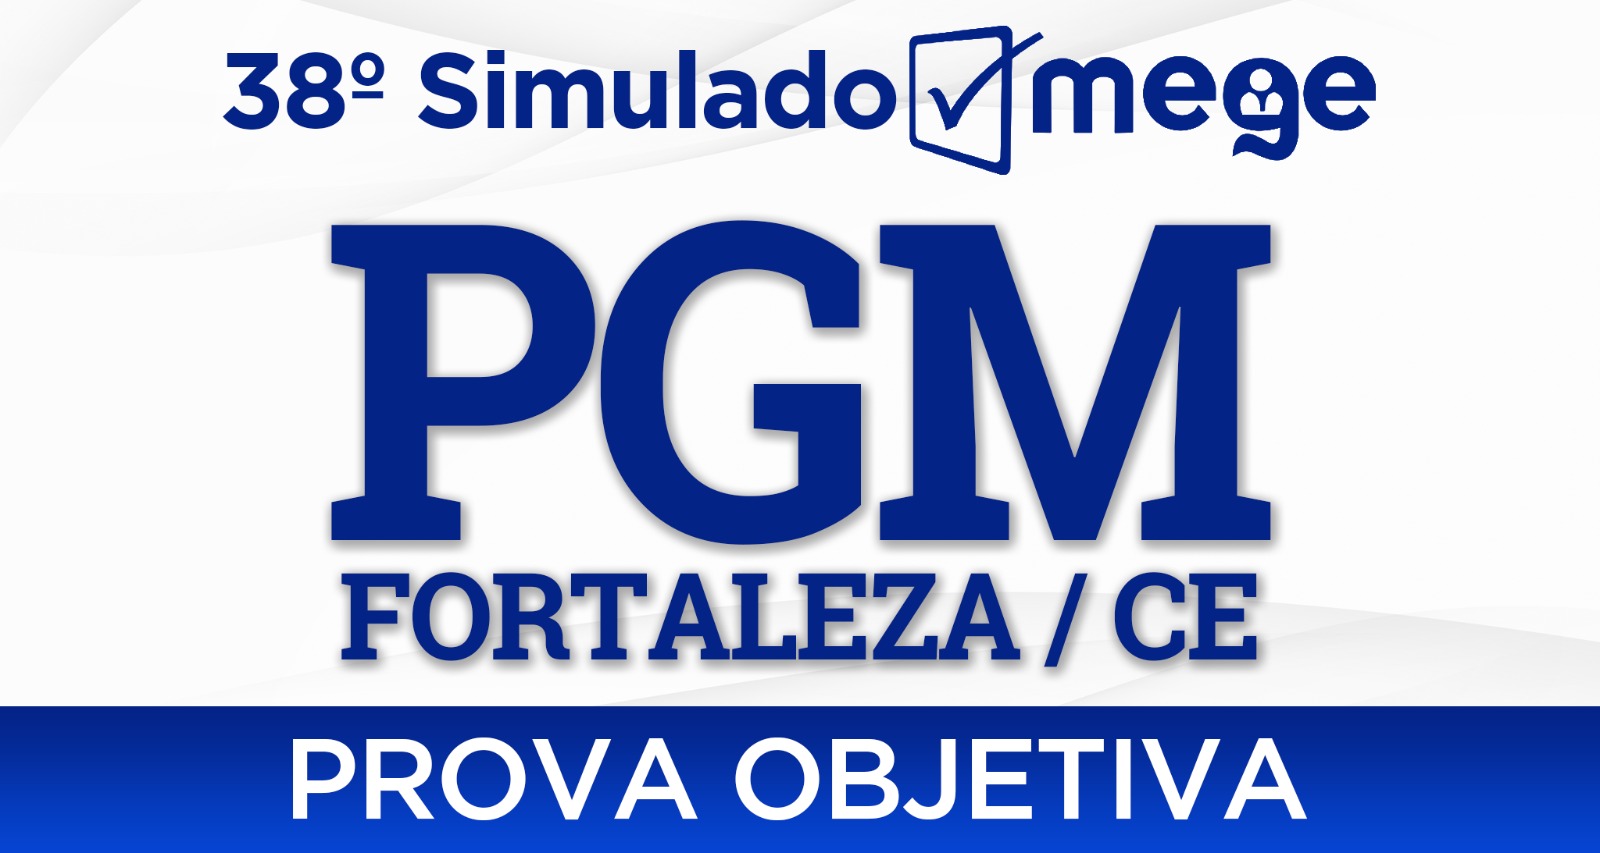 38º Simulado Mege (1ª fase, PGM-Fortaleza)